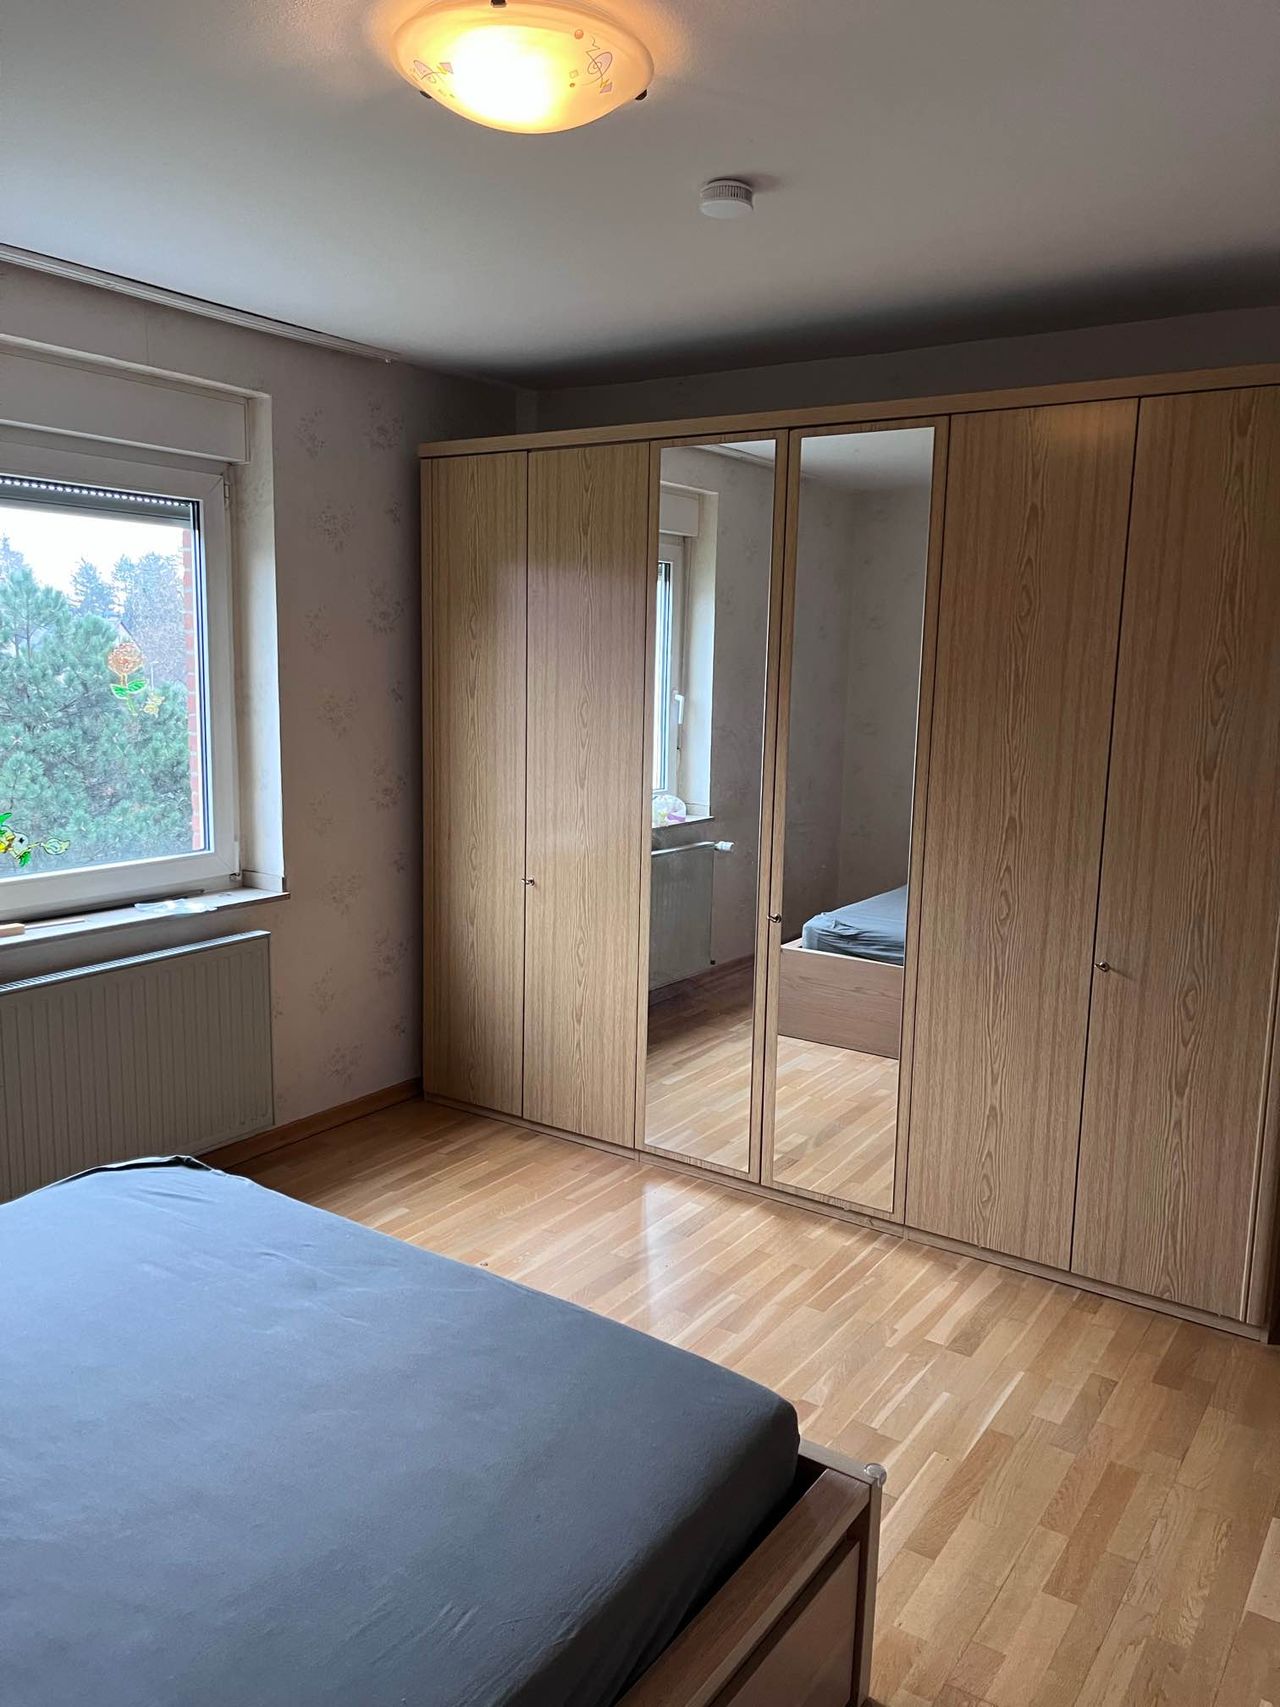 Fully furnished 2.5-room flat in a quiet neighbourhood of Düsseldorf